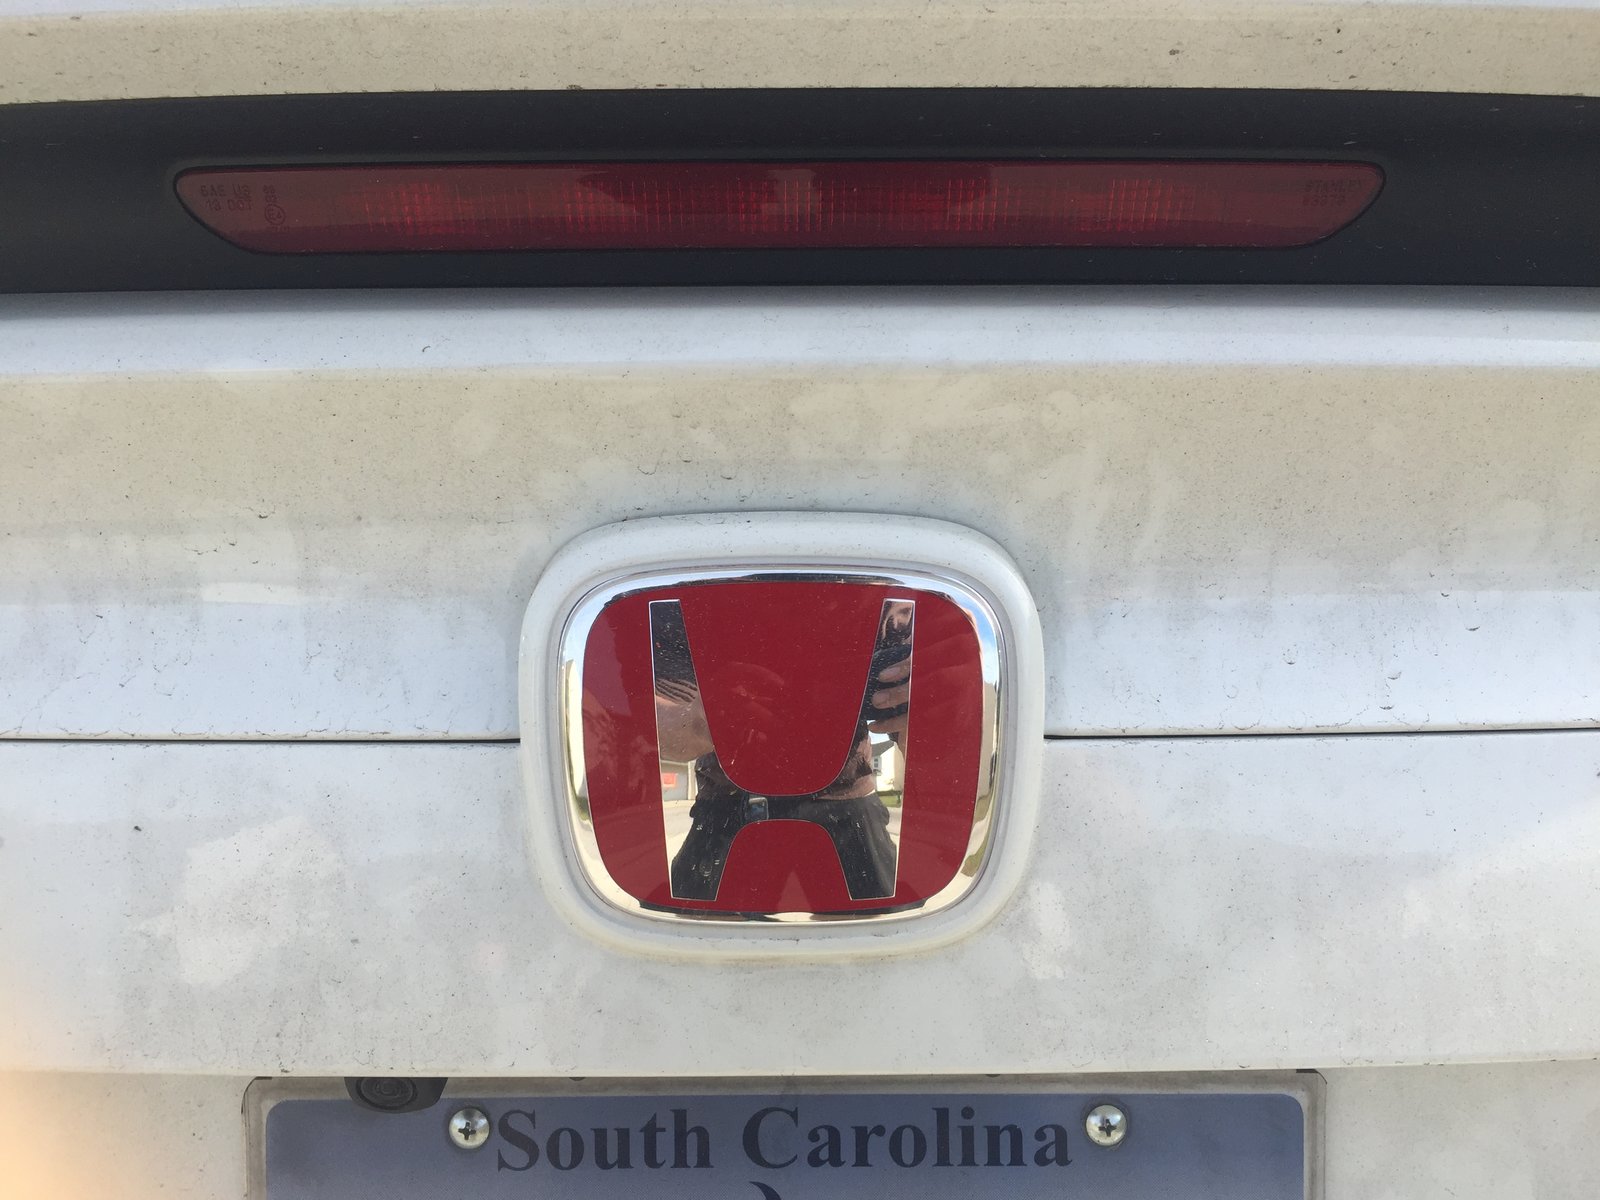 Honda Civic 10th gen Honda civic si 2017 sedan red H emblem 69E40D36-0238-4B60-8C13-81C3BD48009E